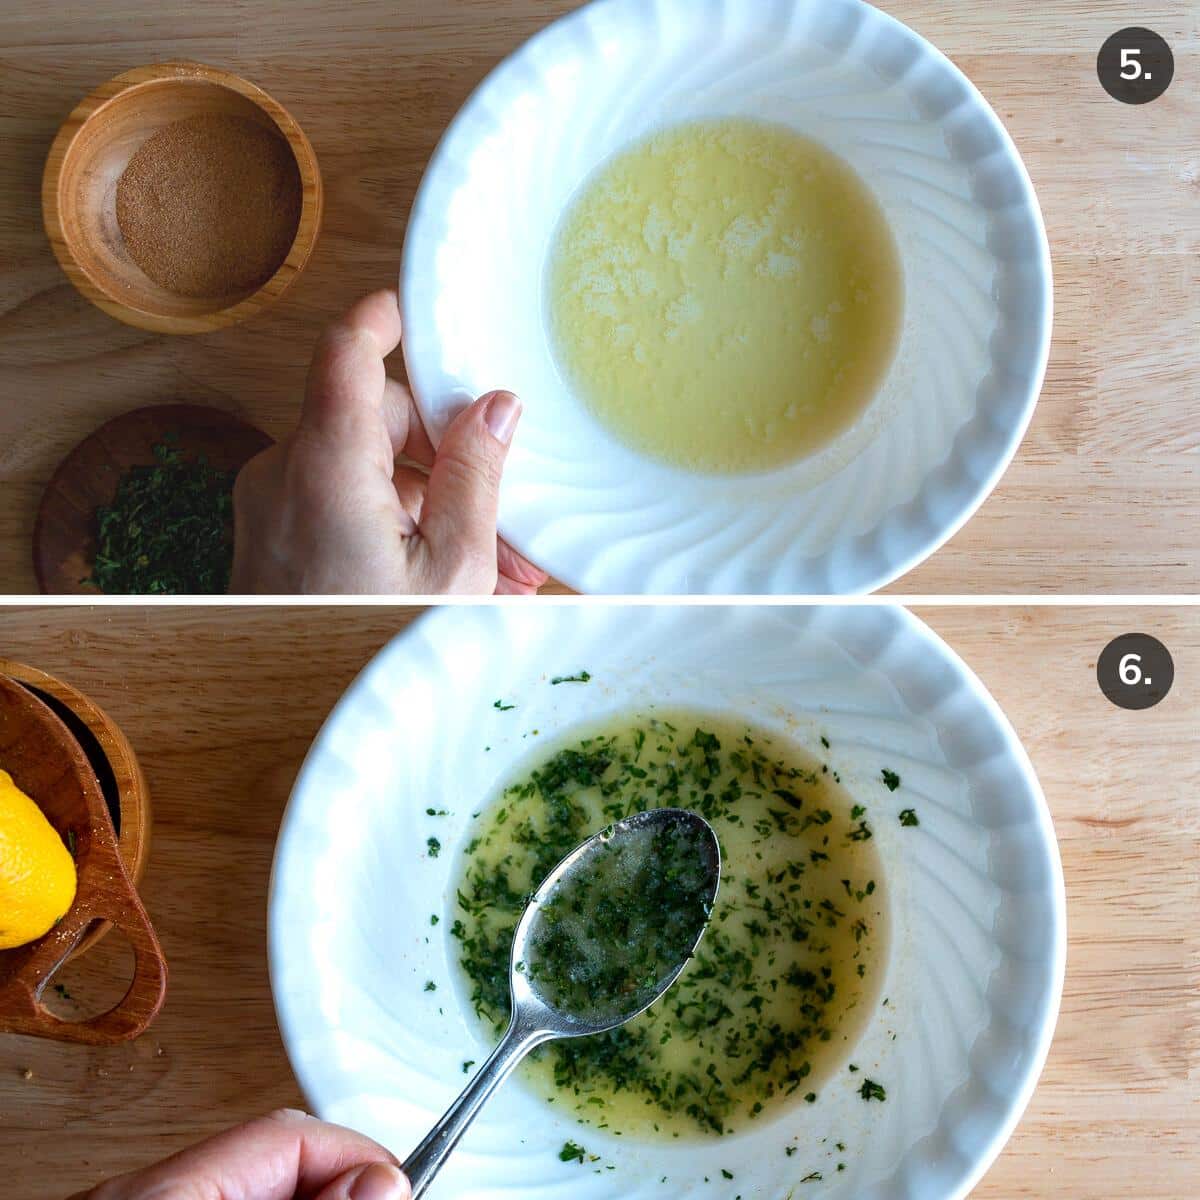 Lemon garlic butter sauce getting mixed in a white bowl.